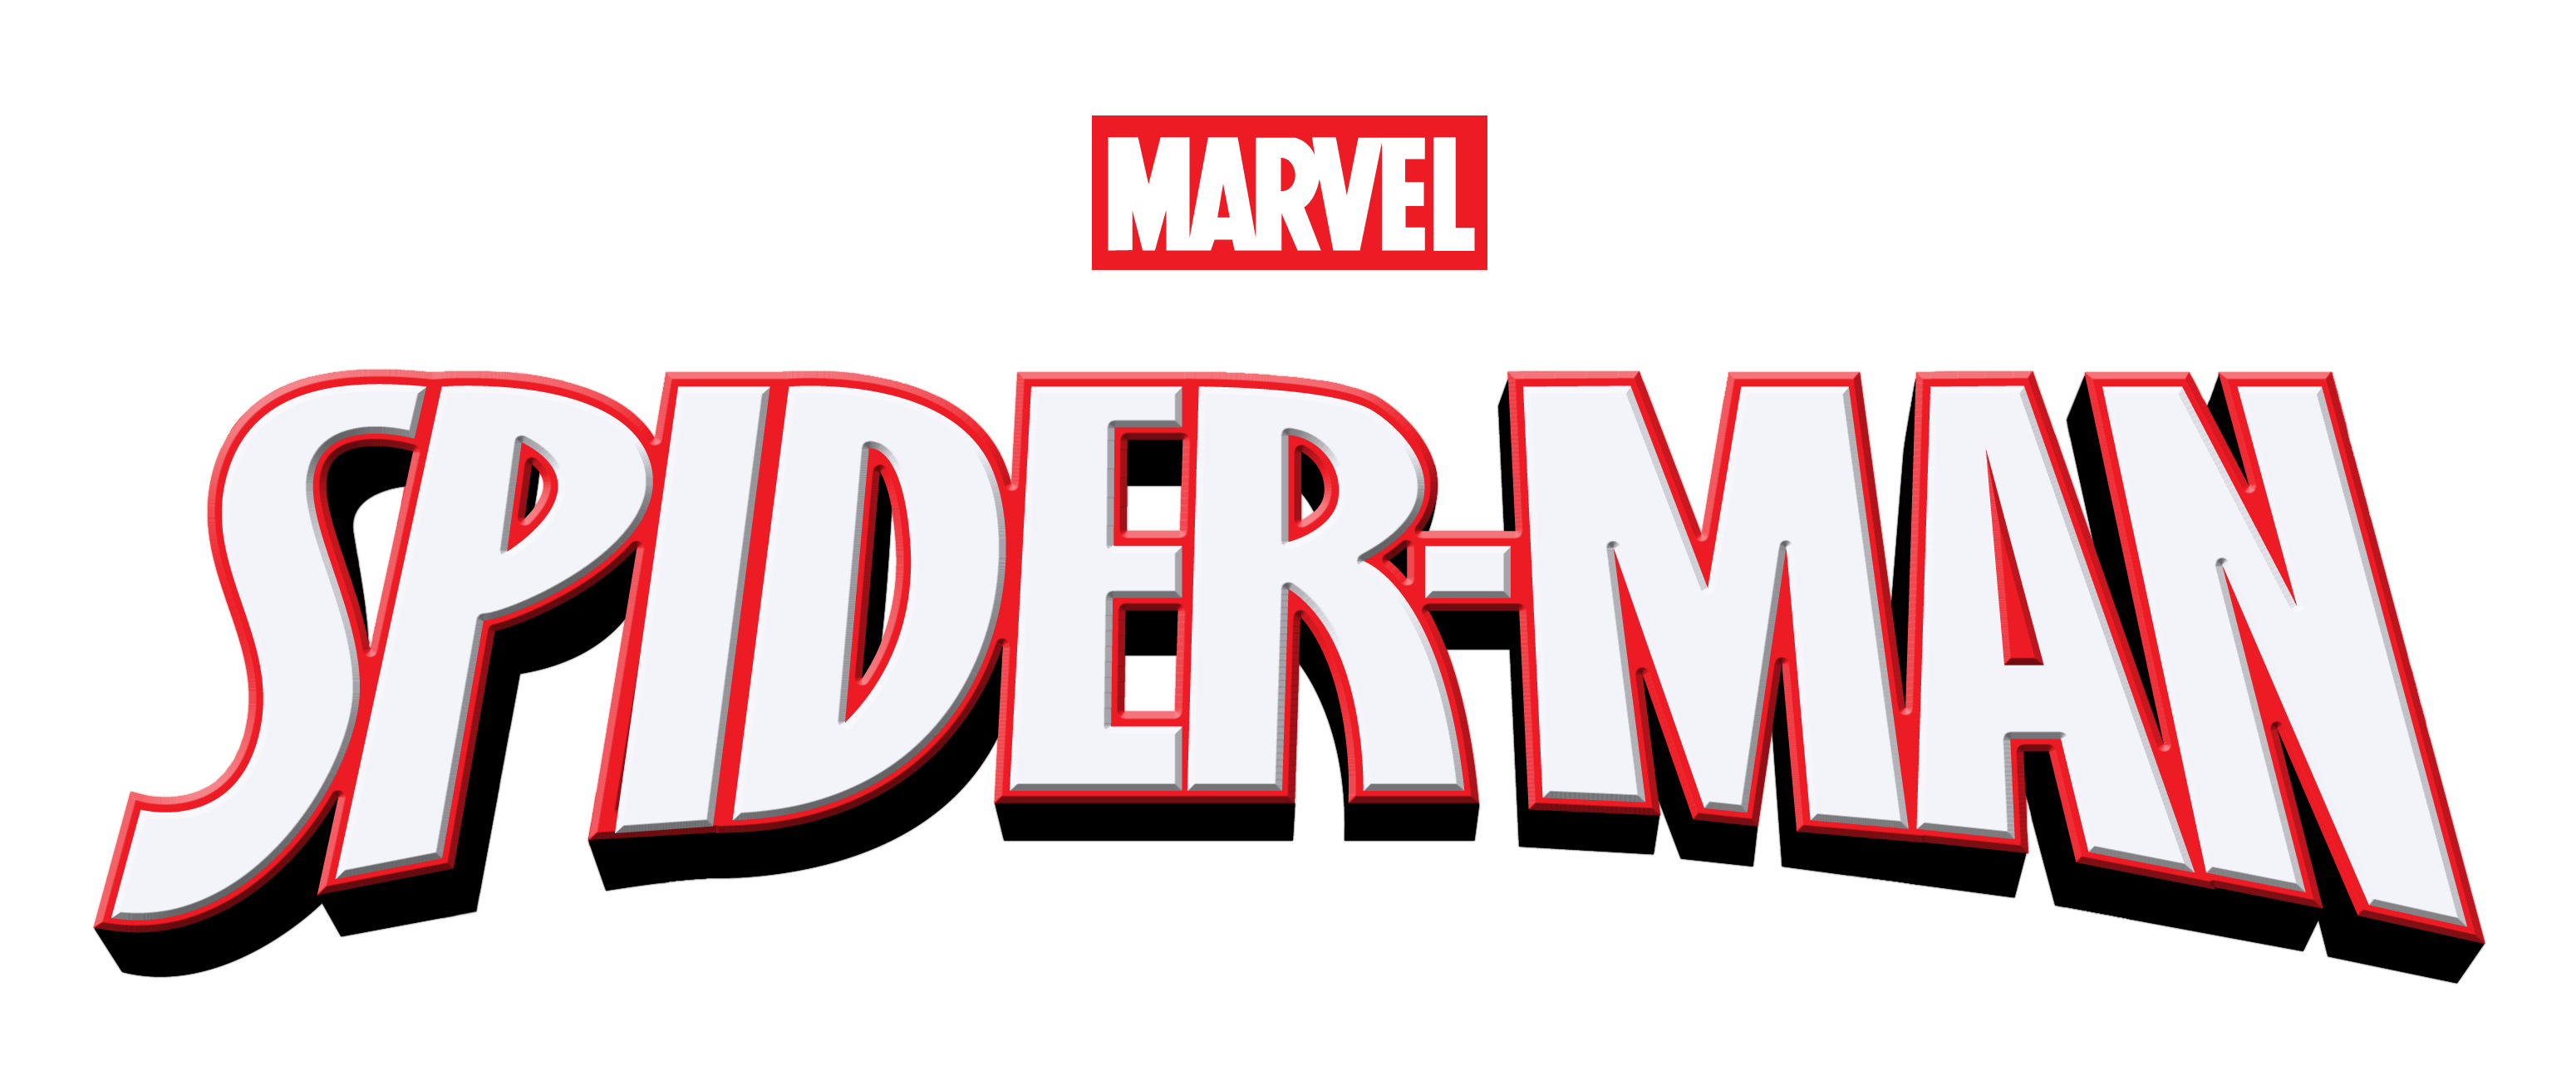 Download Spiderman Logo images